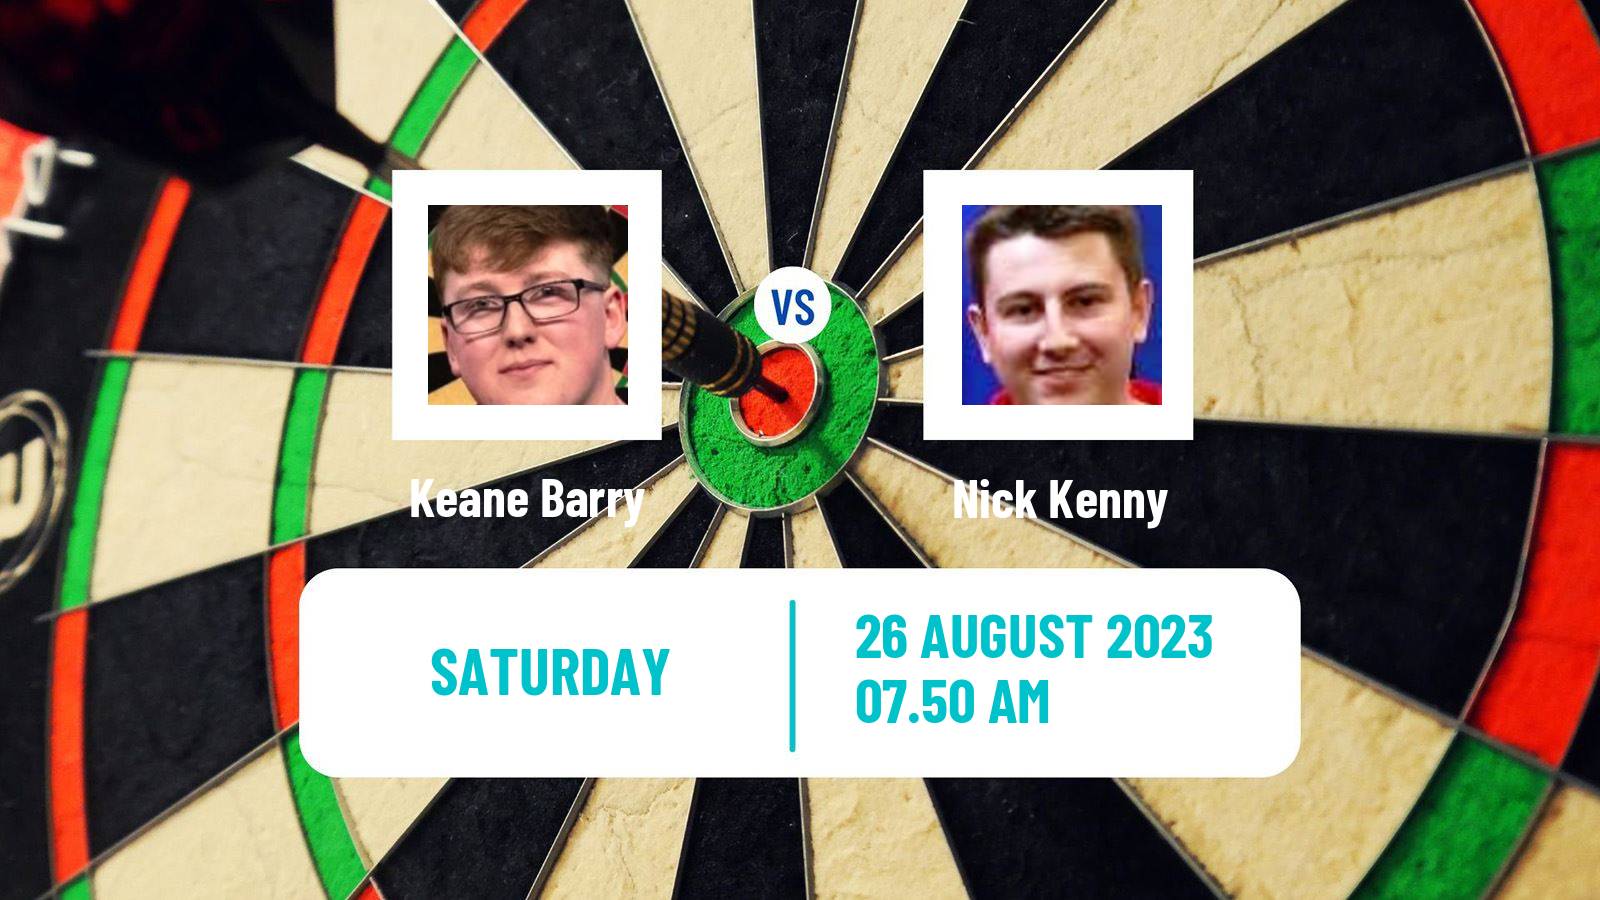 Darts Players Championship 17 Keane Barry - Nick Kenny